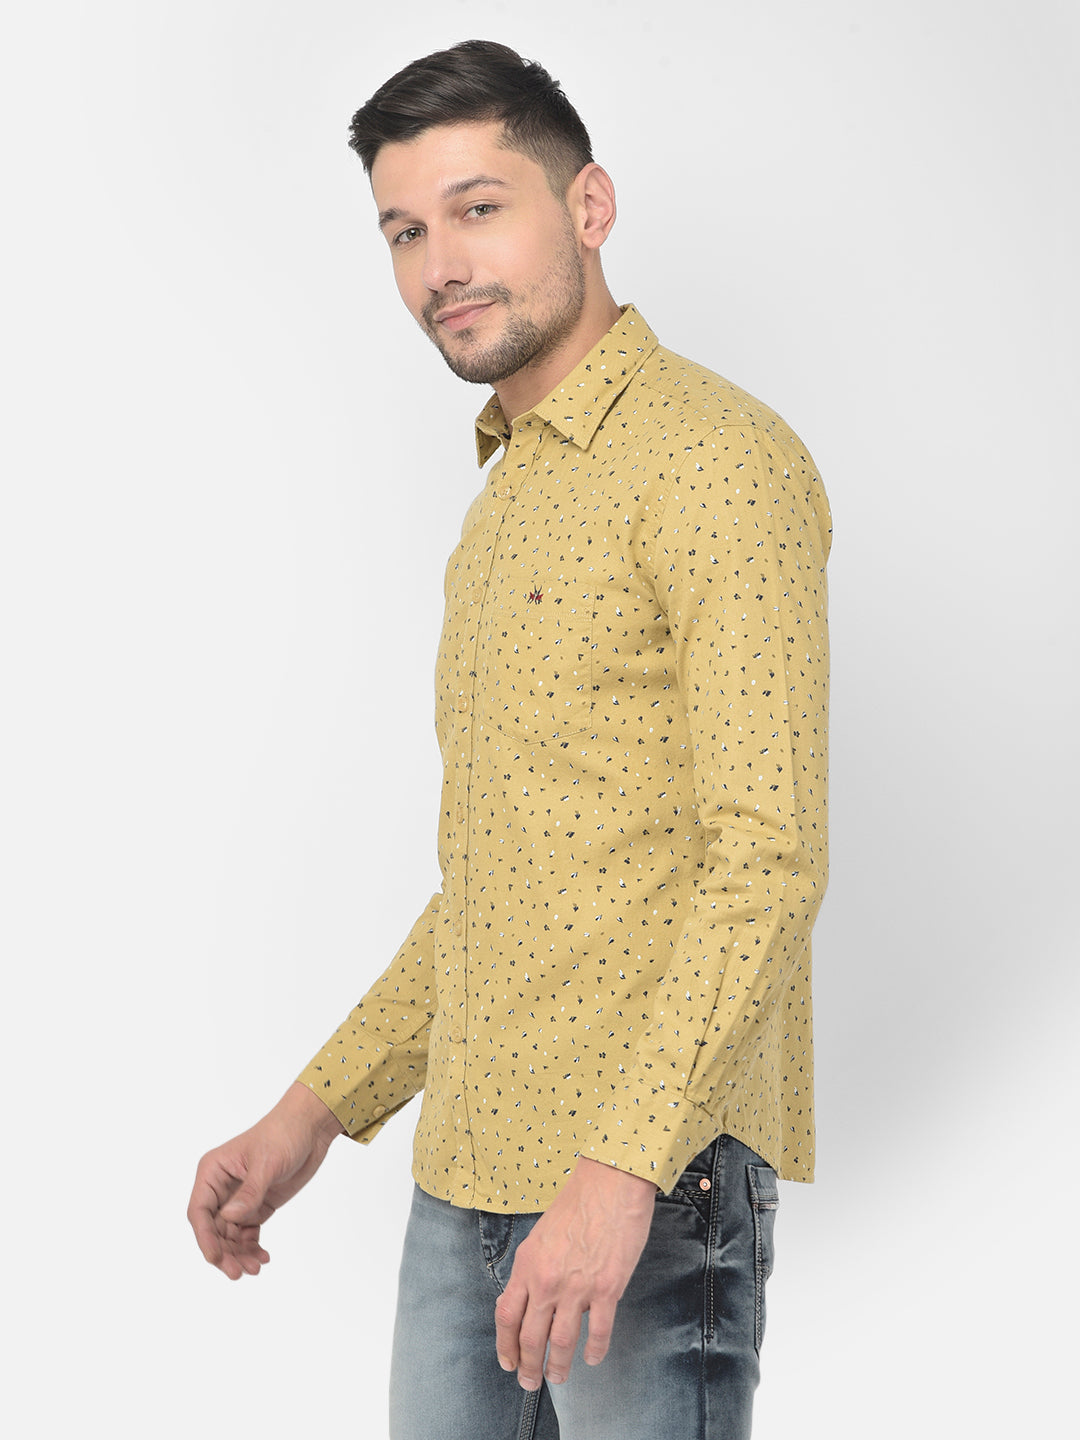 Beige Printed Spread Collar Shirt - Men Shirts